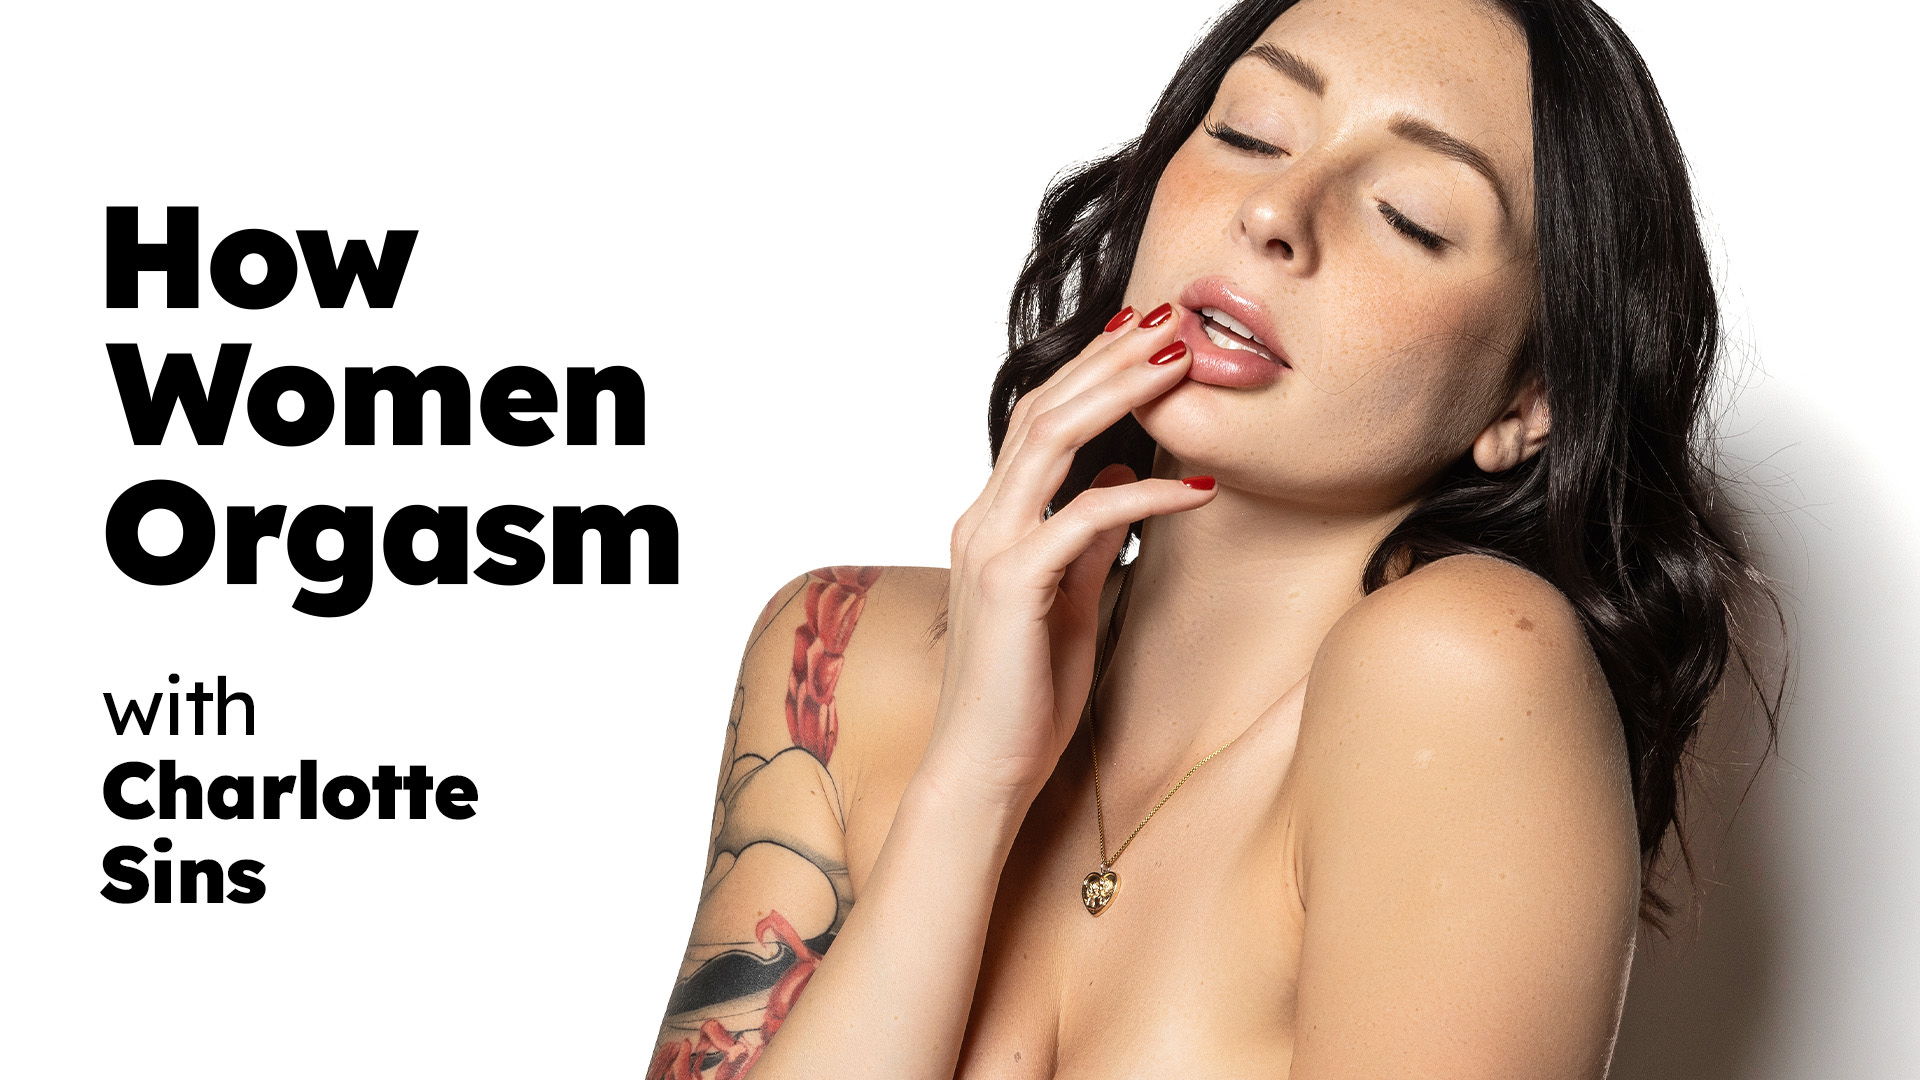 How Women Orgasm – Charlotte Sins – Charlotte Sins – How Women Orgasm – Adult Time